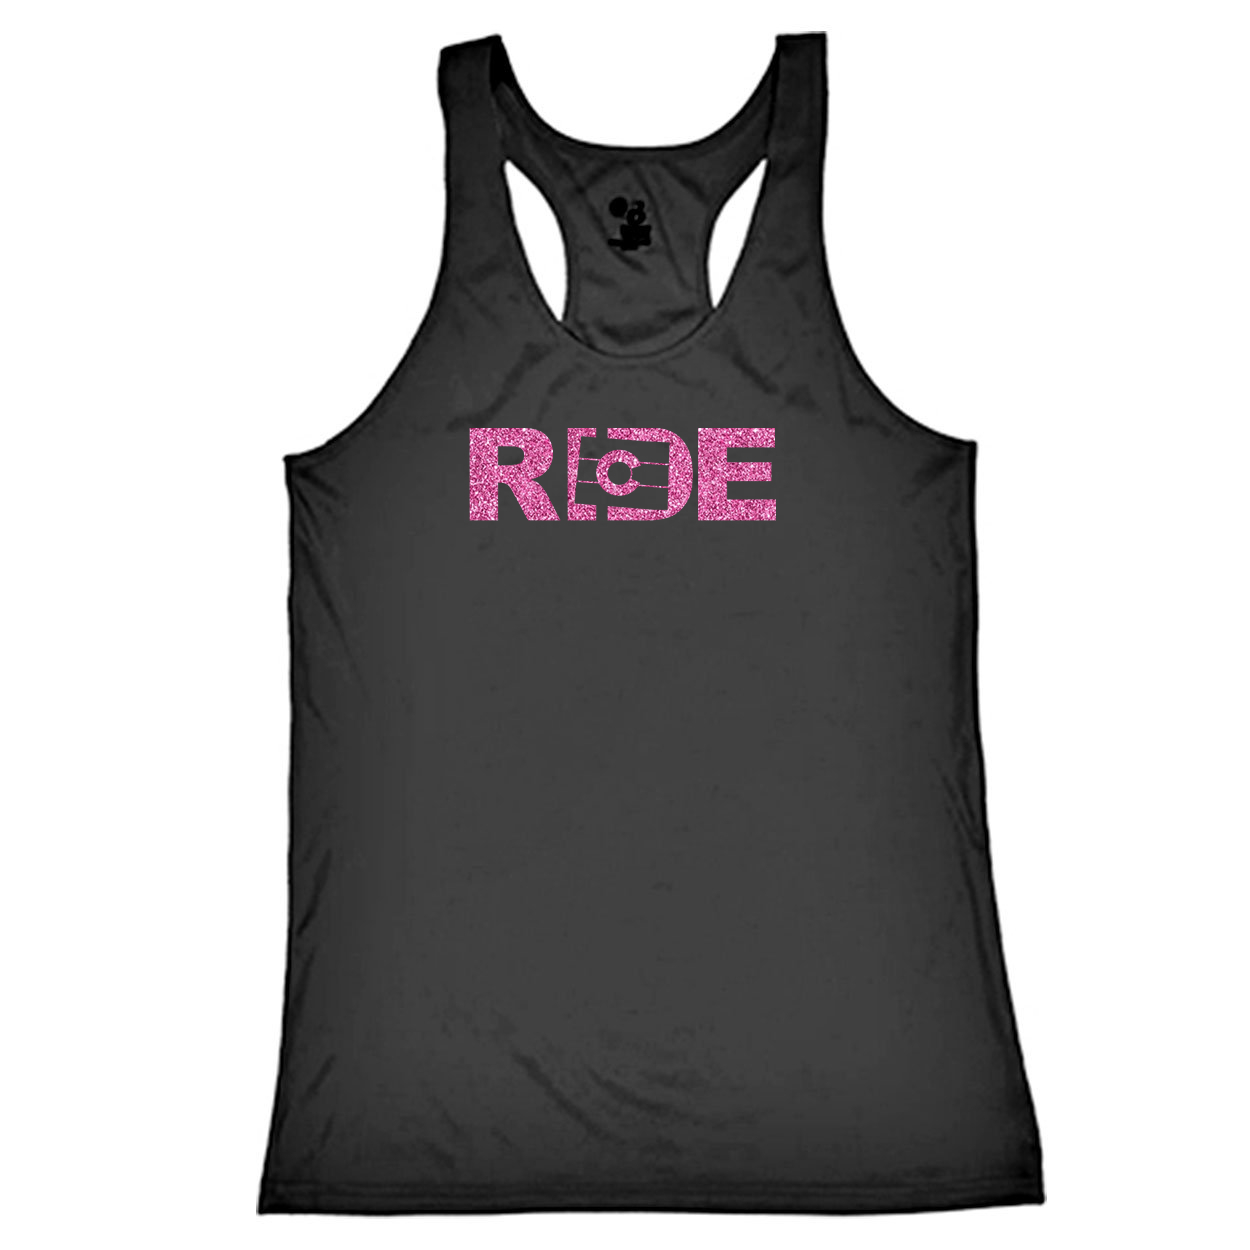 Ride Colorado Classic Youth Girls Performance Racerback Tank Top Black (Glitter Pink Logo)